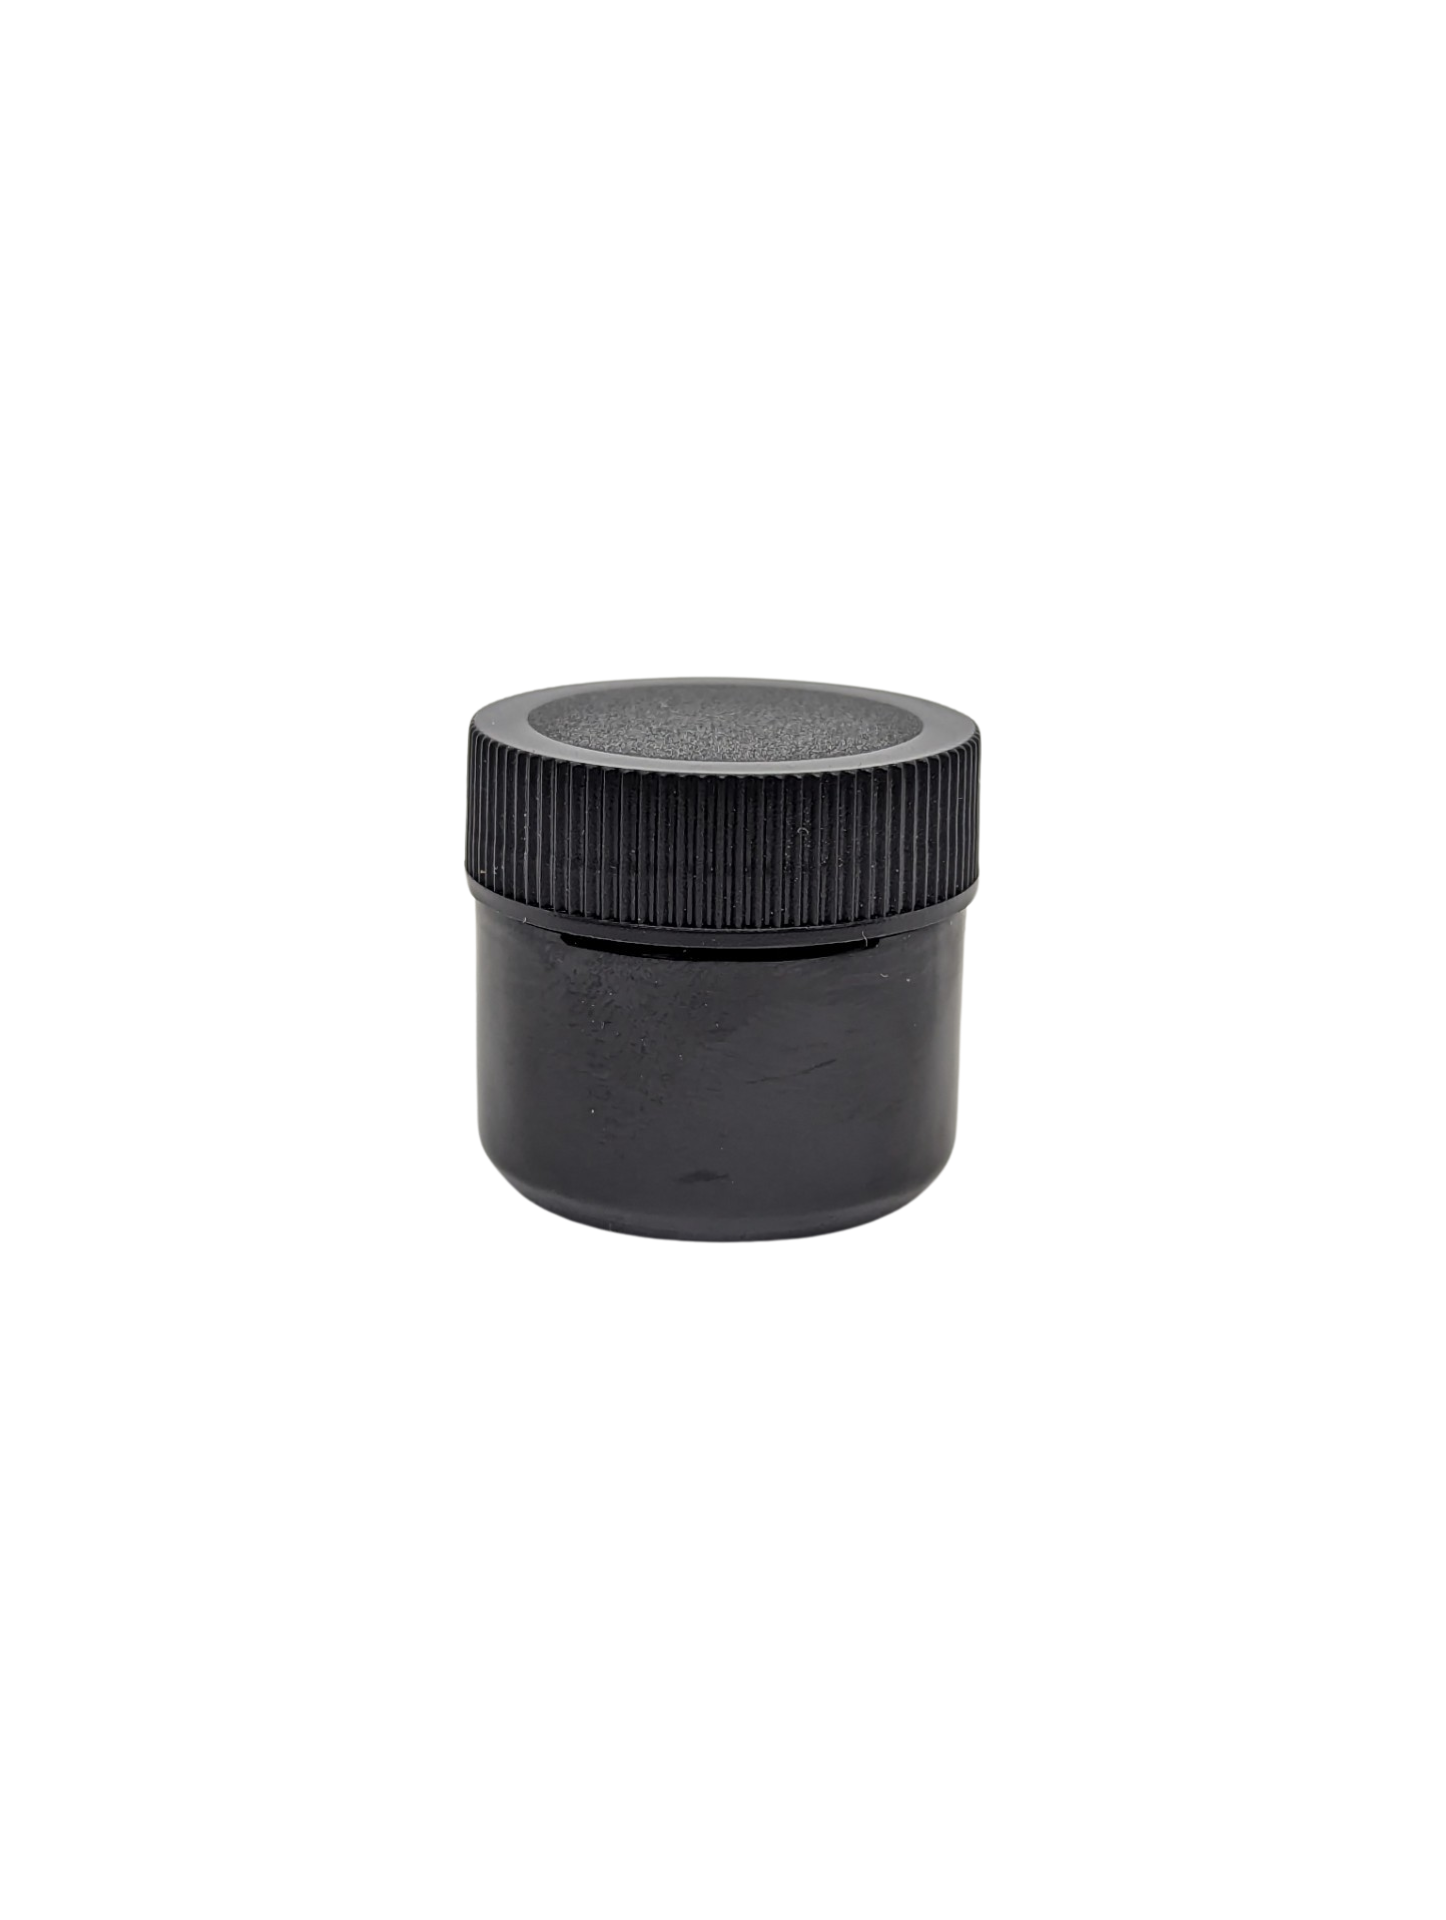 5ml Glass Shoulderless Concentrate Jars | Screw Top | Black Glass Jar, Black Lid